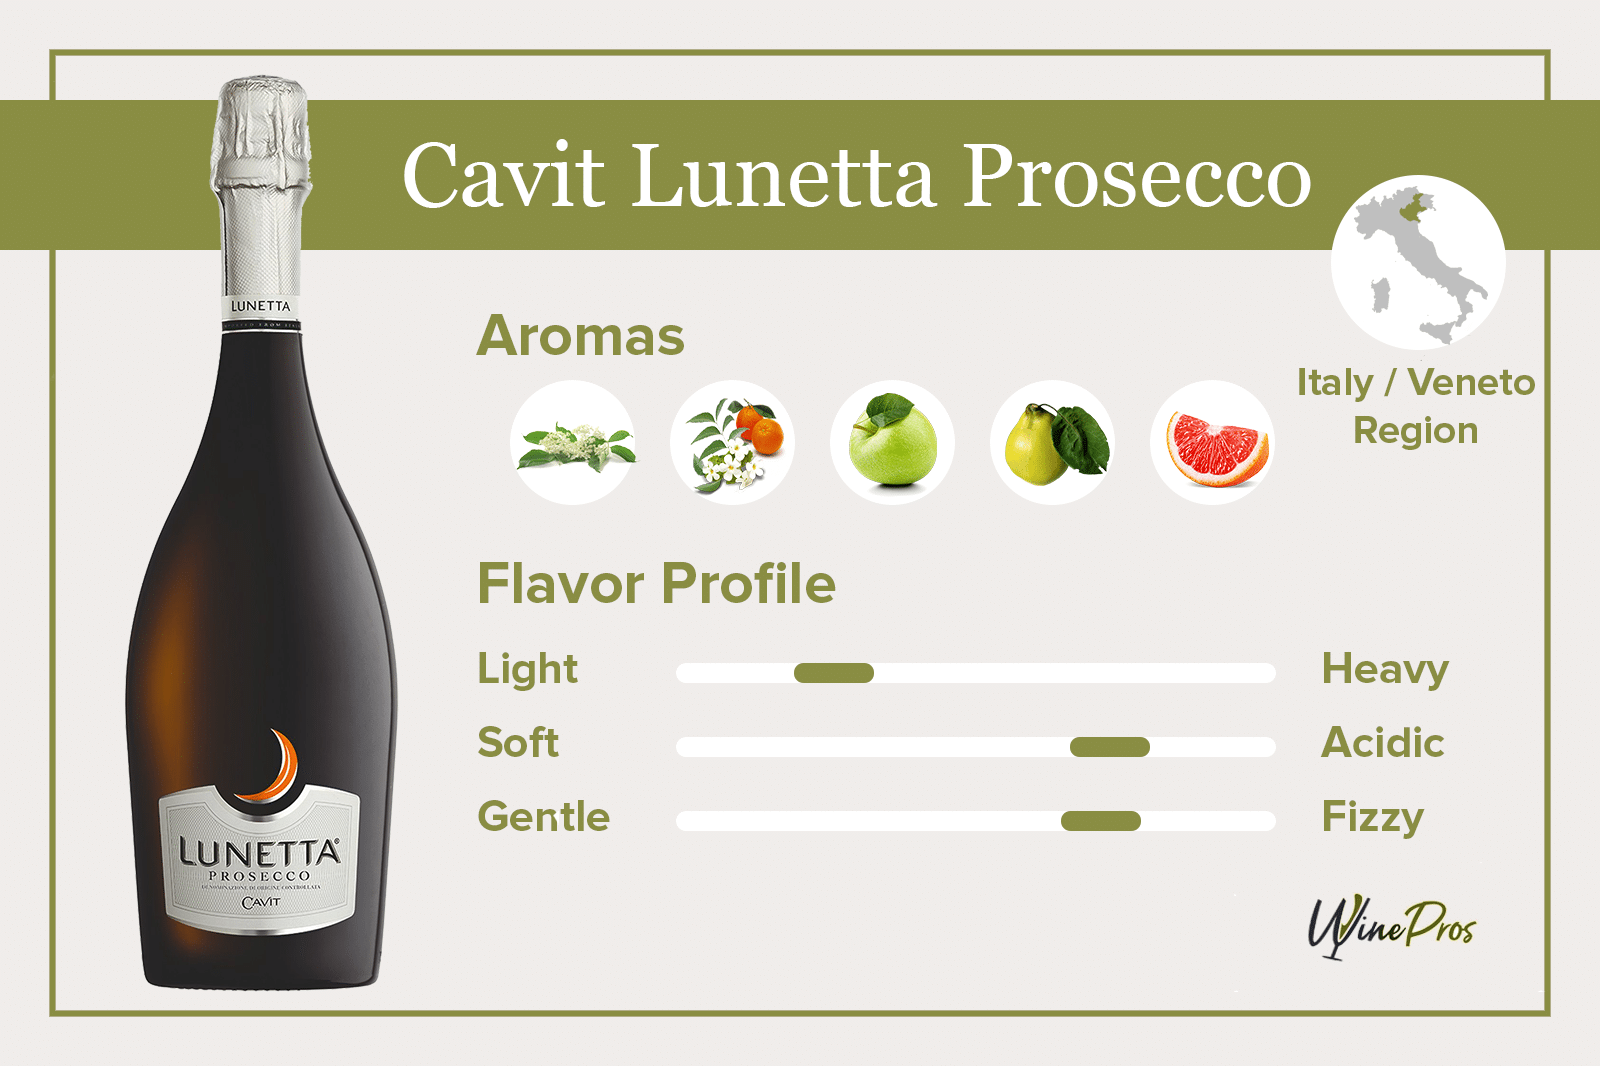 Cavit Lunetta Prosecco Featured